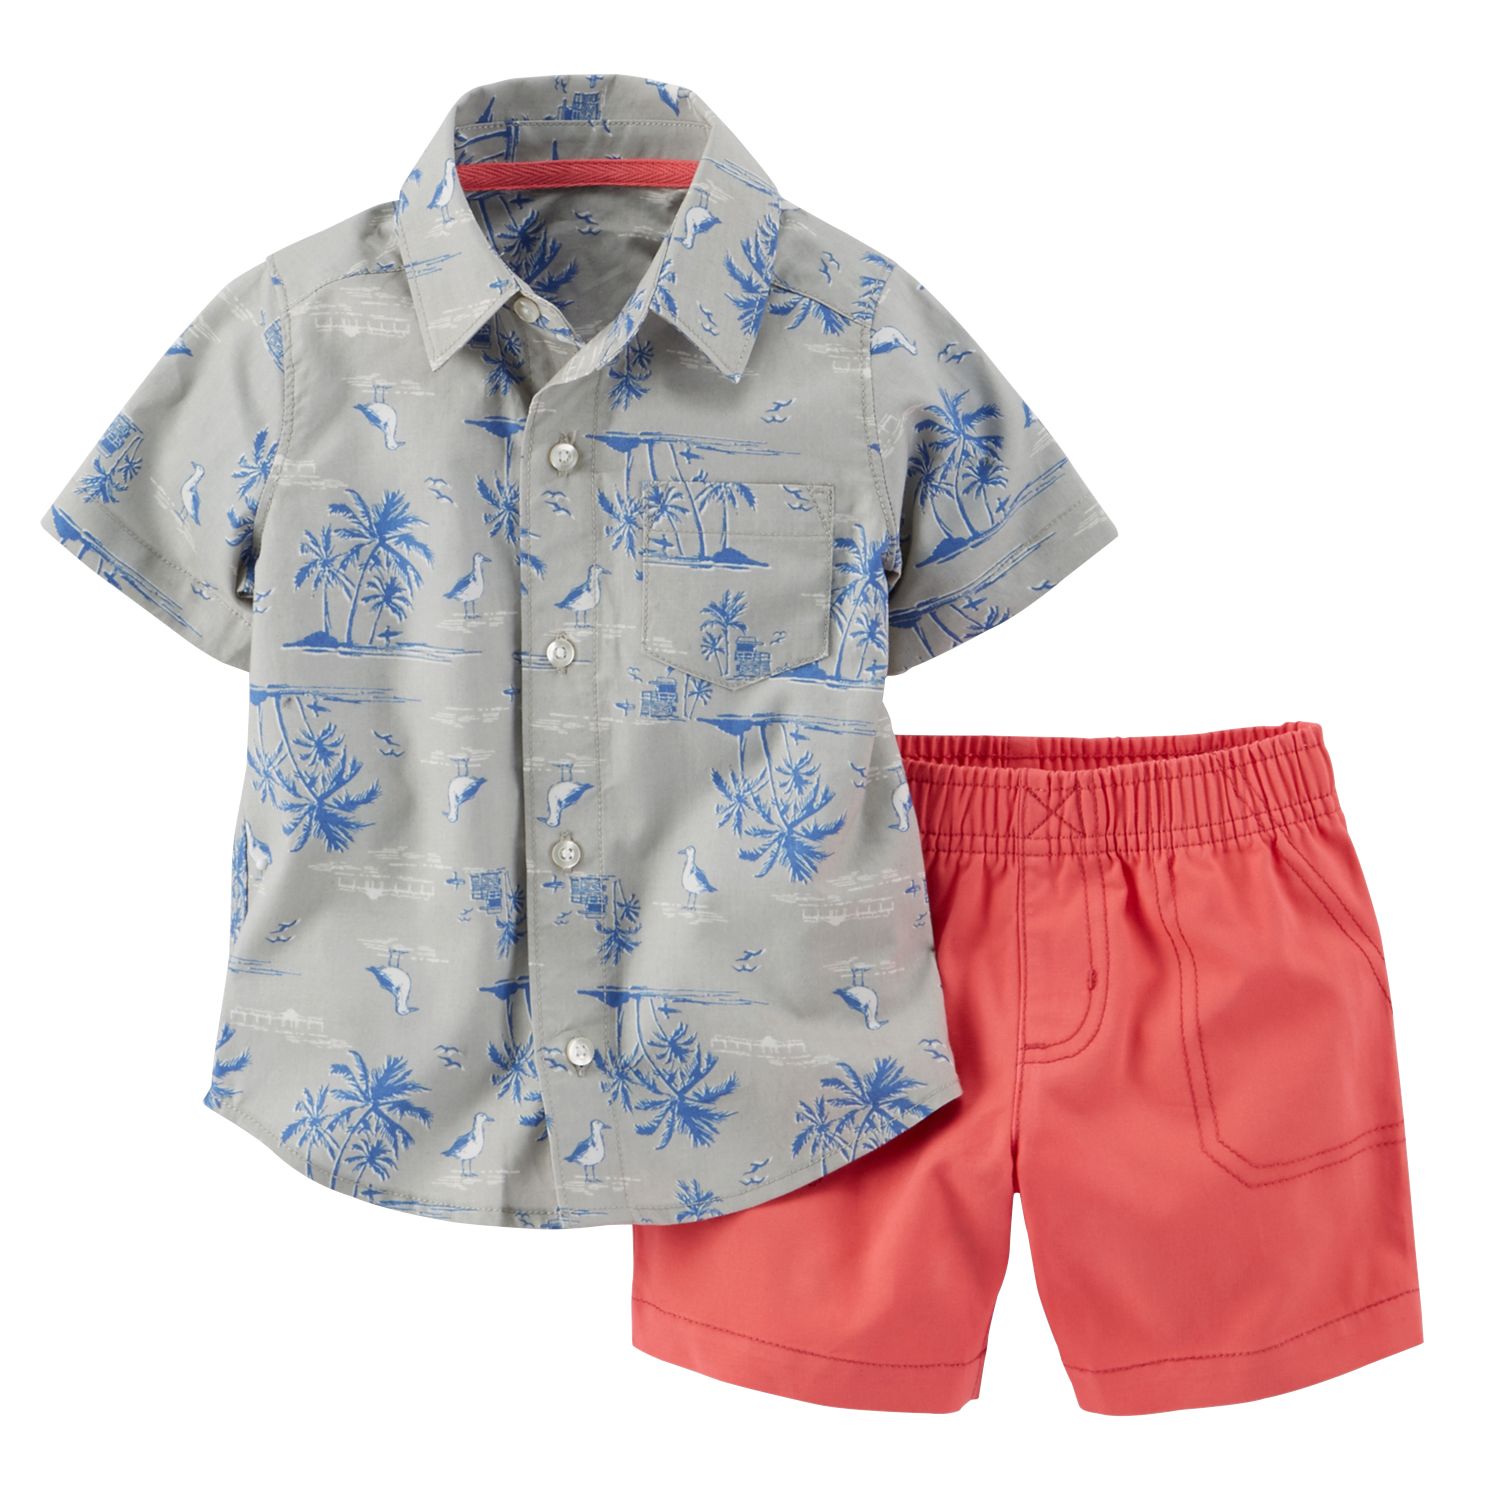 boys hawaiian outfits